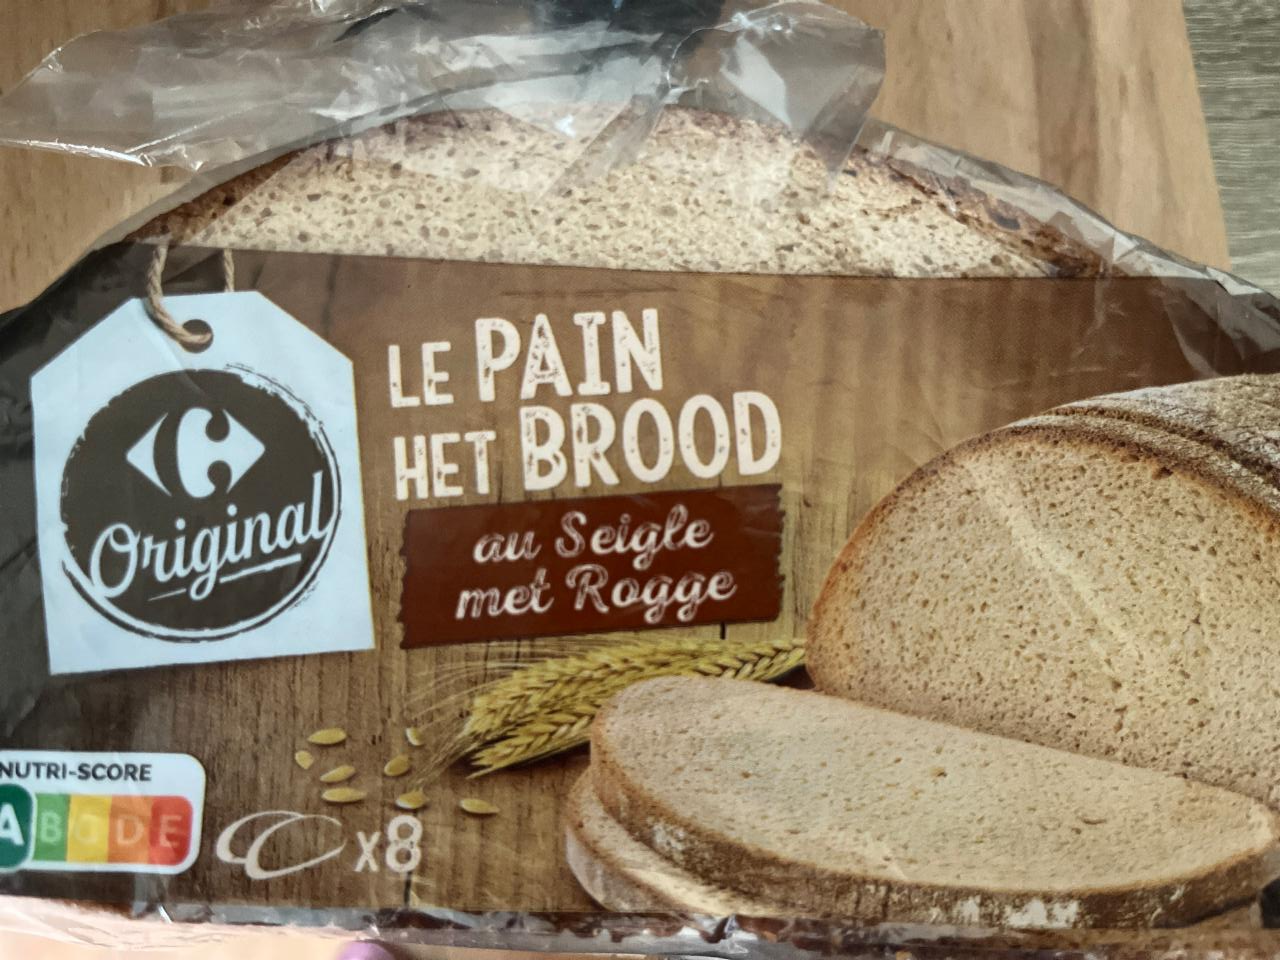 Fotografie - Le pain het brood au seigle met rogge Carrefour Original